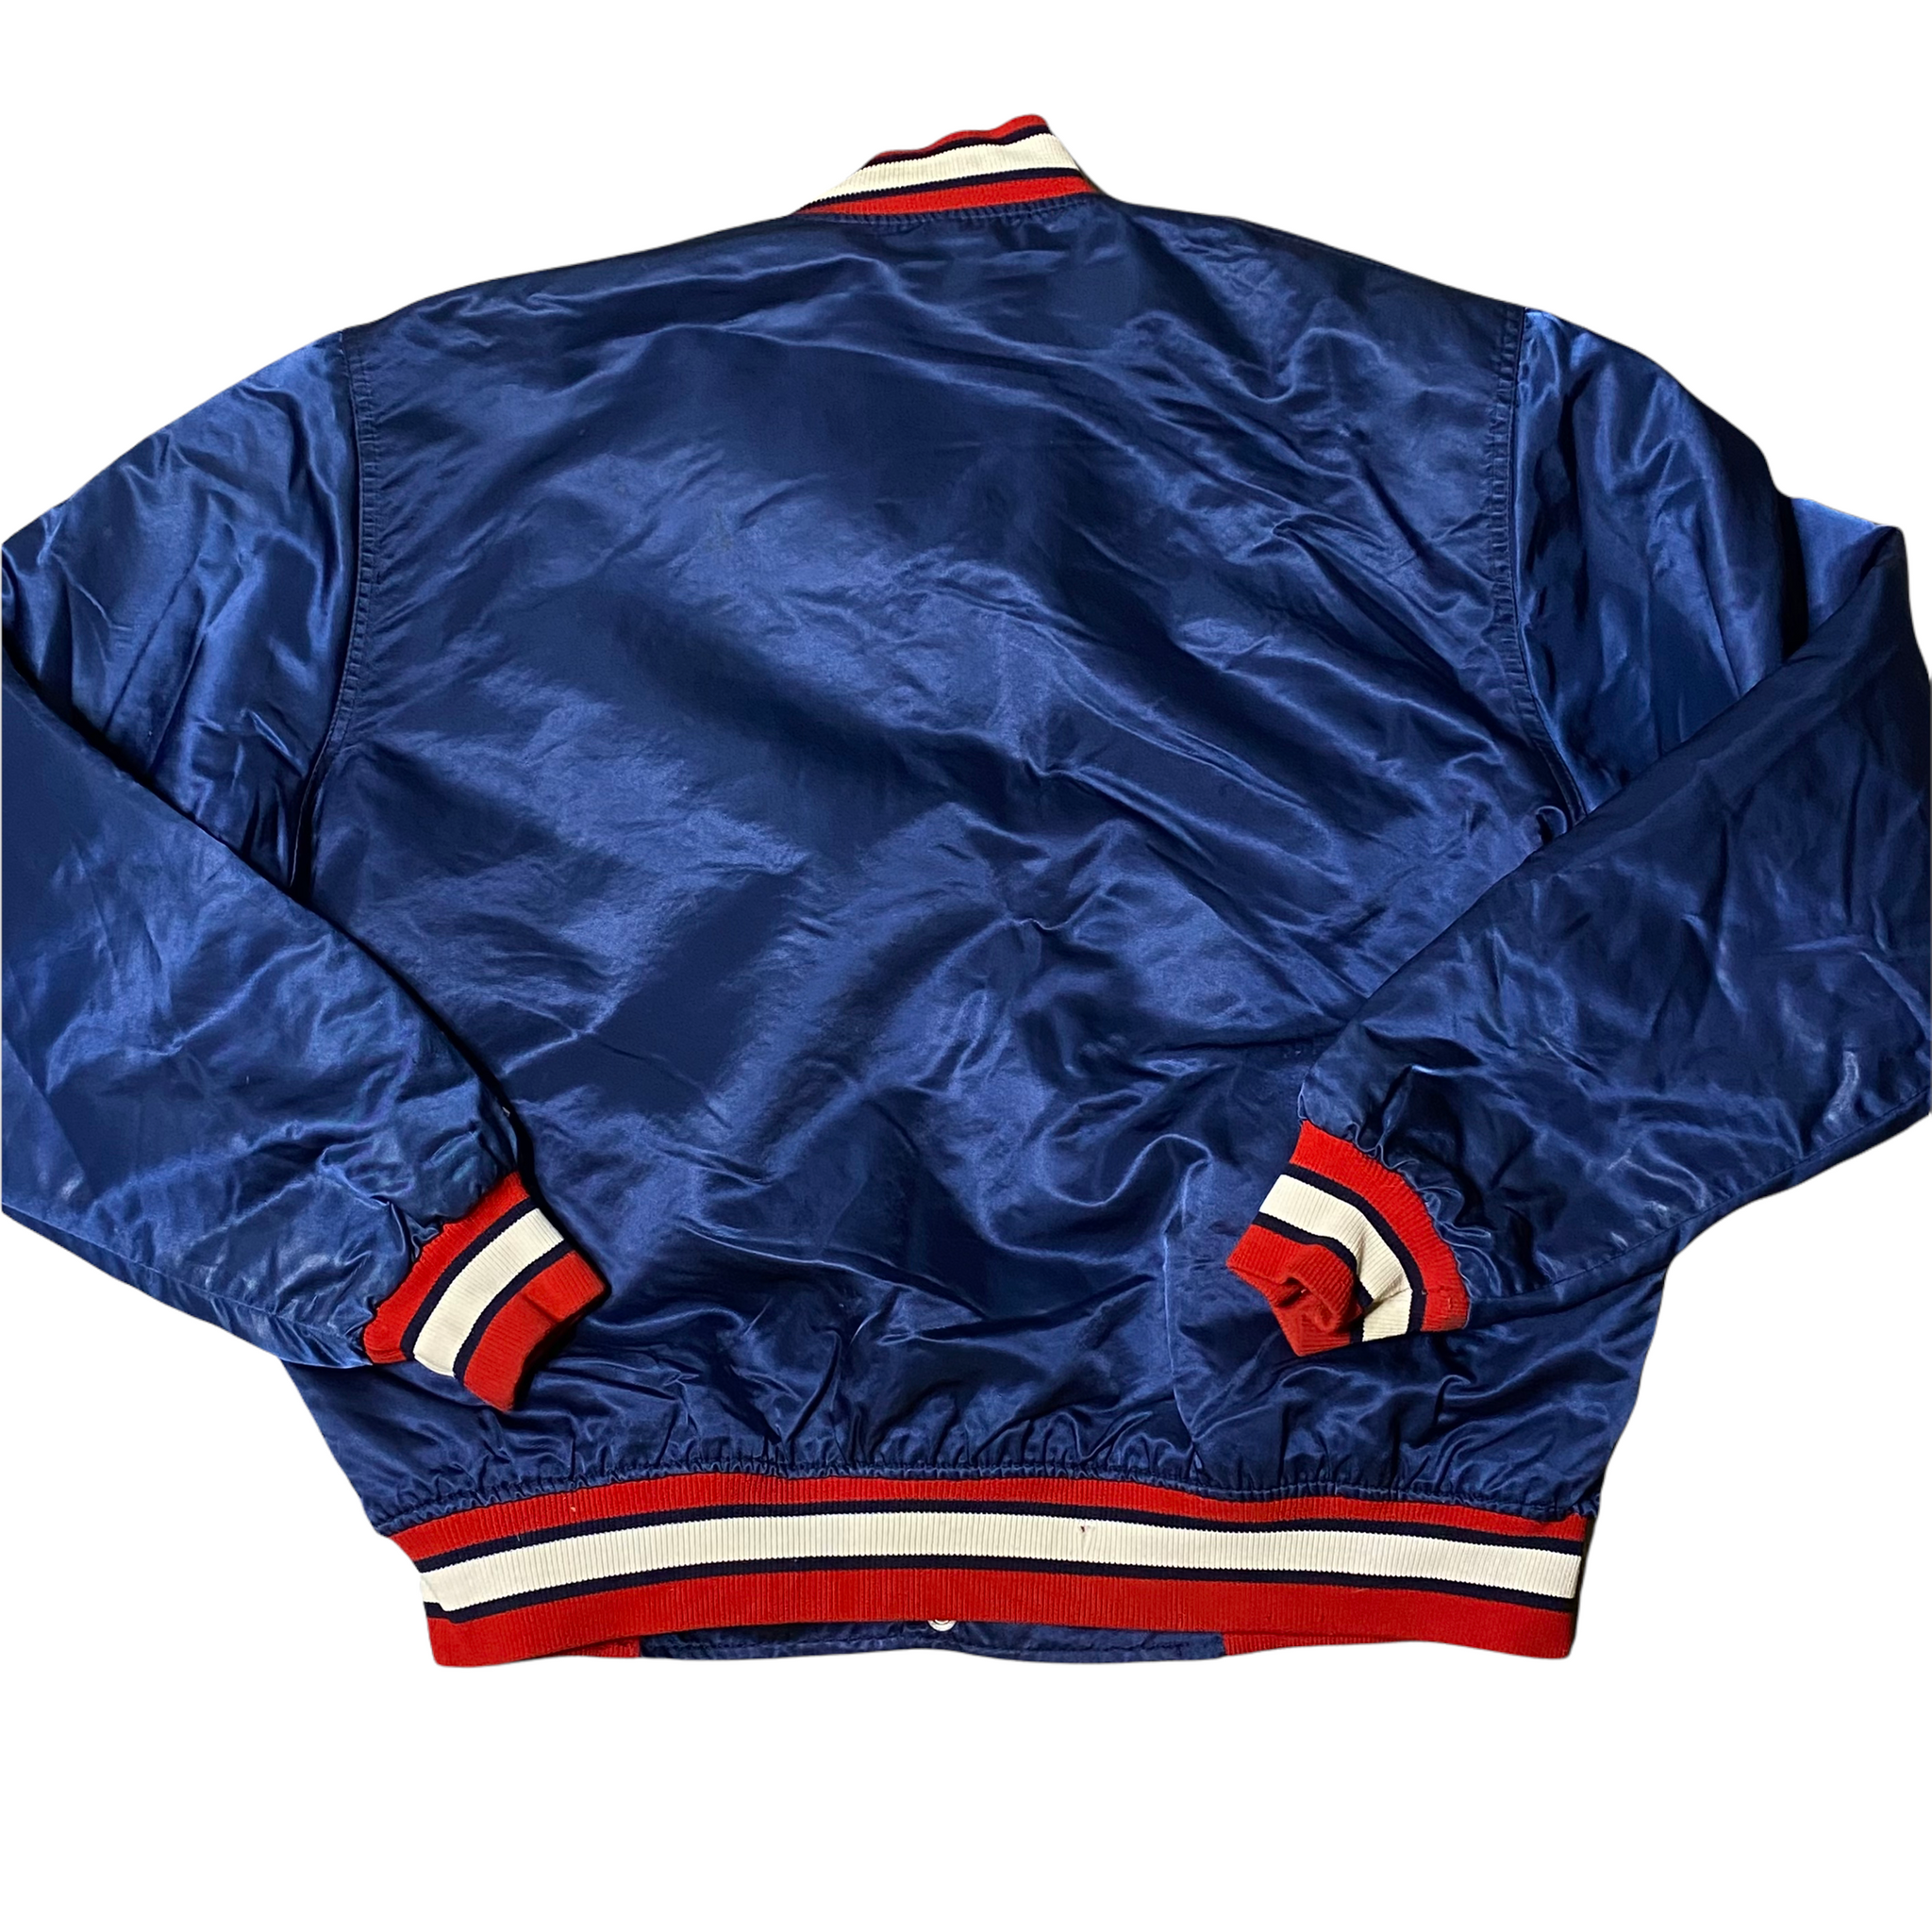 Atlanta Braves Vintage Starter Satin Bomber Jacket Made in 